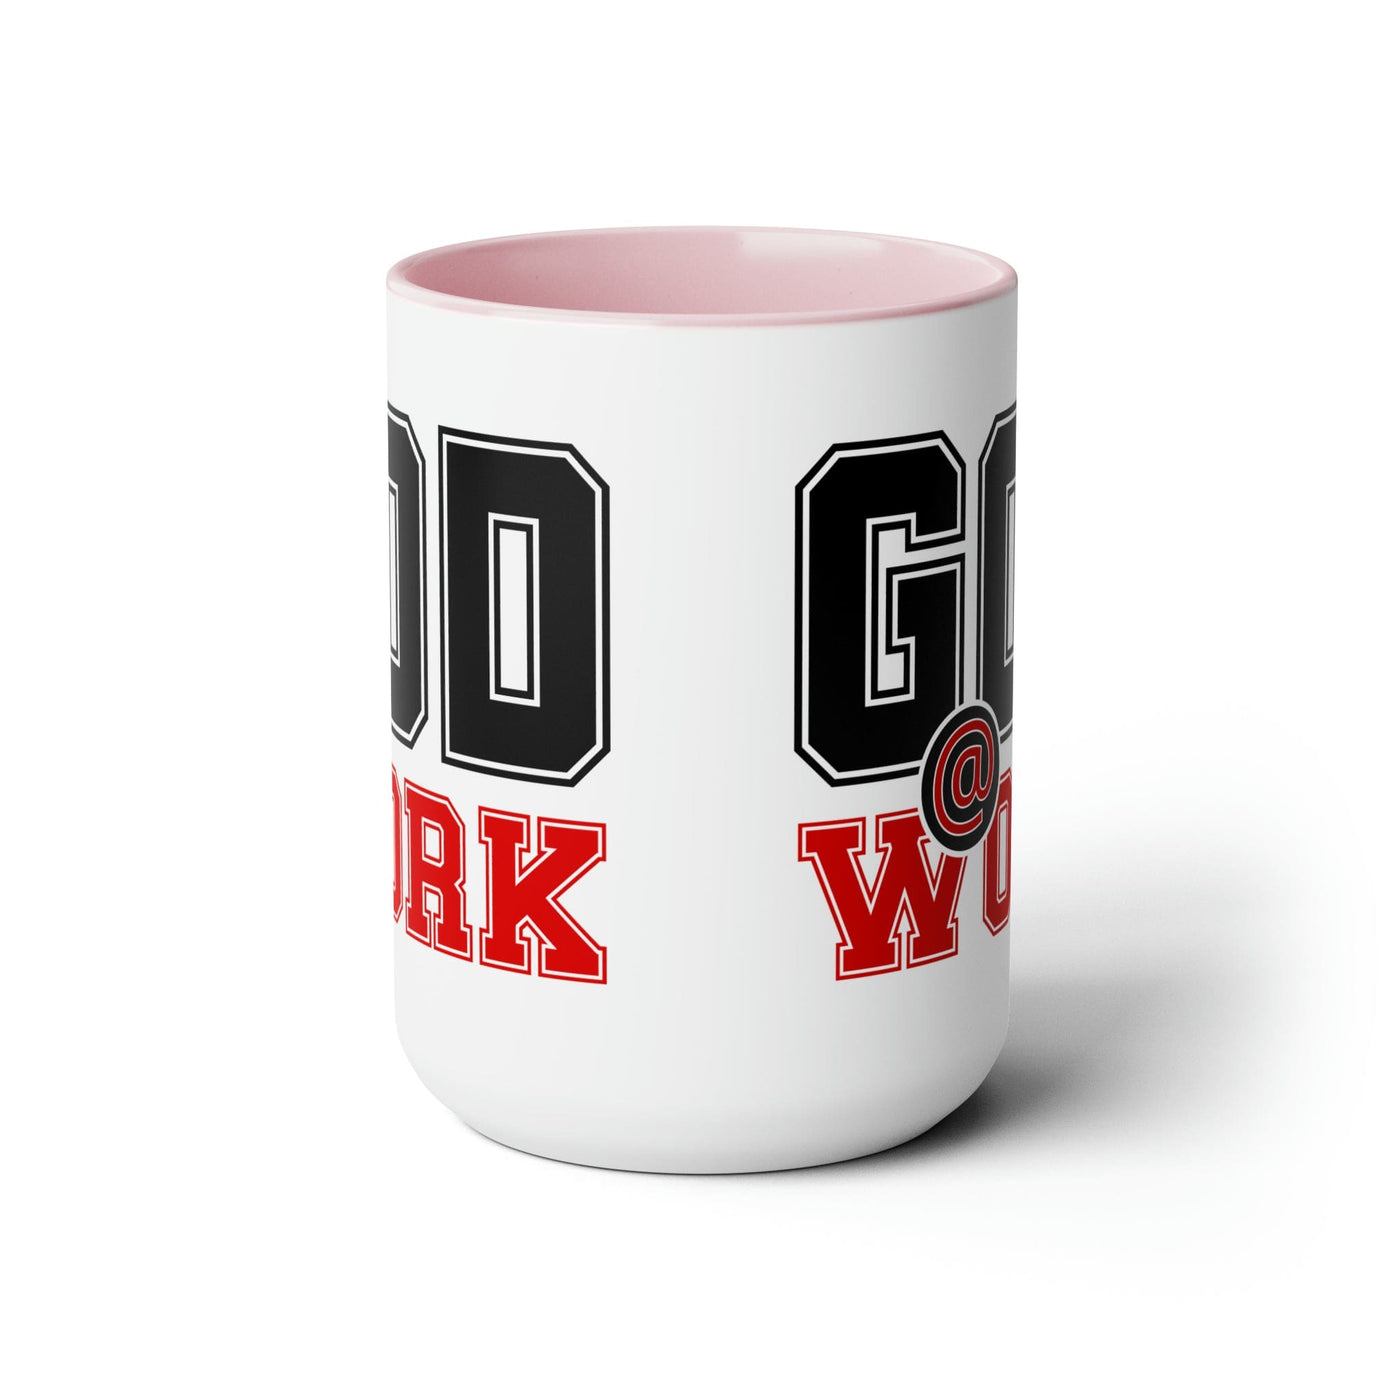 Accent Ceramic Coffee Mug 15oz - God @ Work Black And Red Print - Decorative